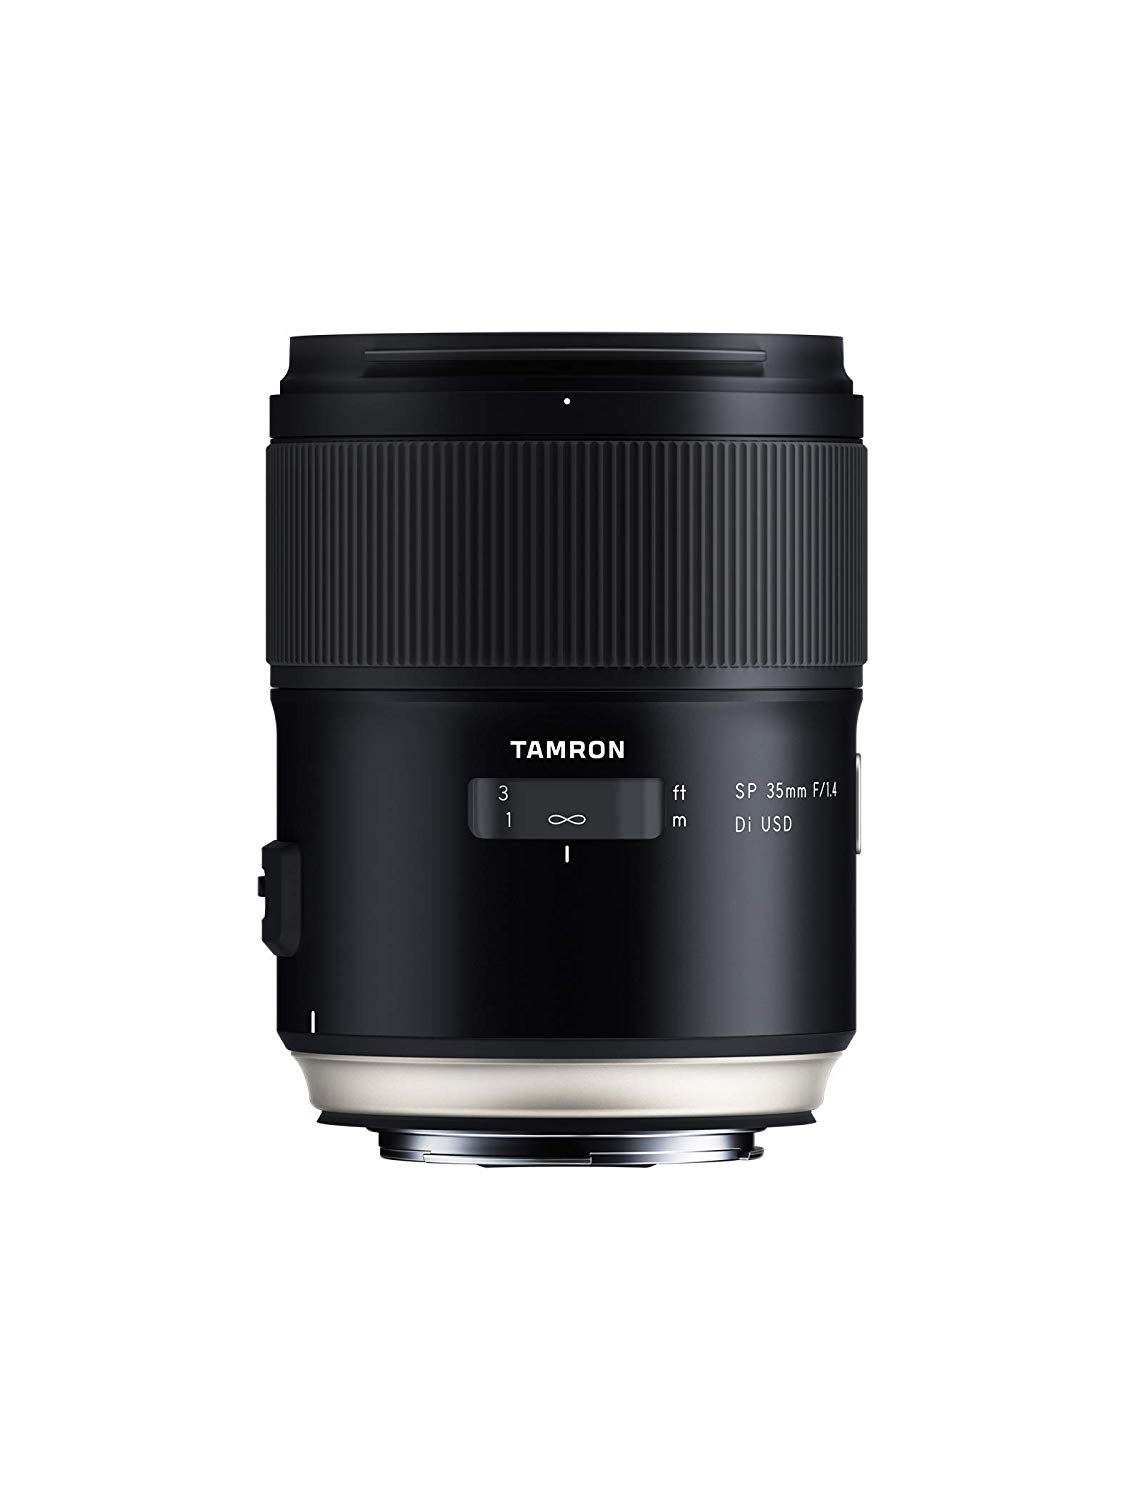 Tamron कैनन EF के लिए टैमरॉन SP 35mm f/1.4 di USD लेंस...